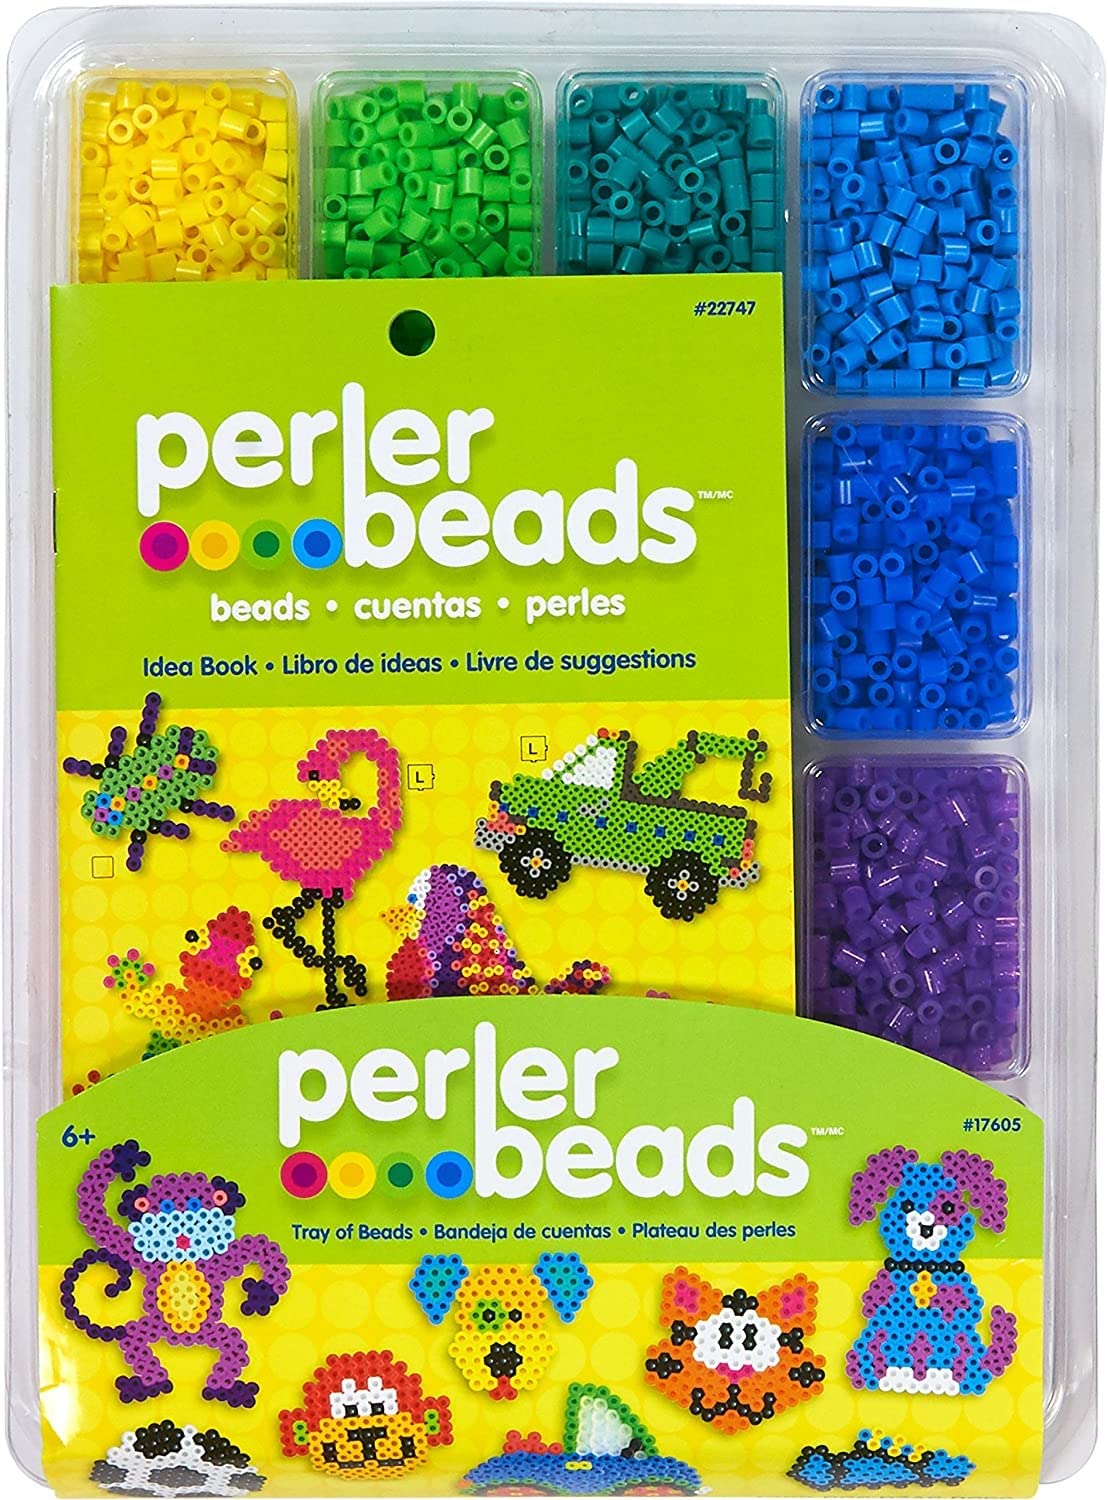 Fuse Beads - fun kids activity 